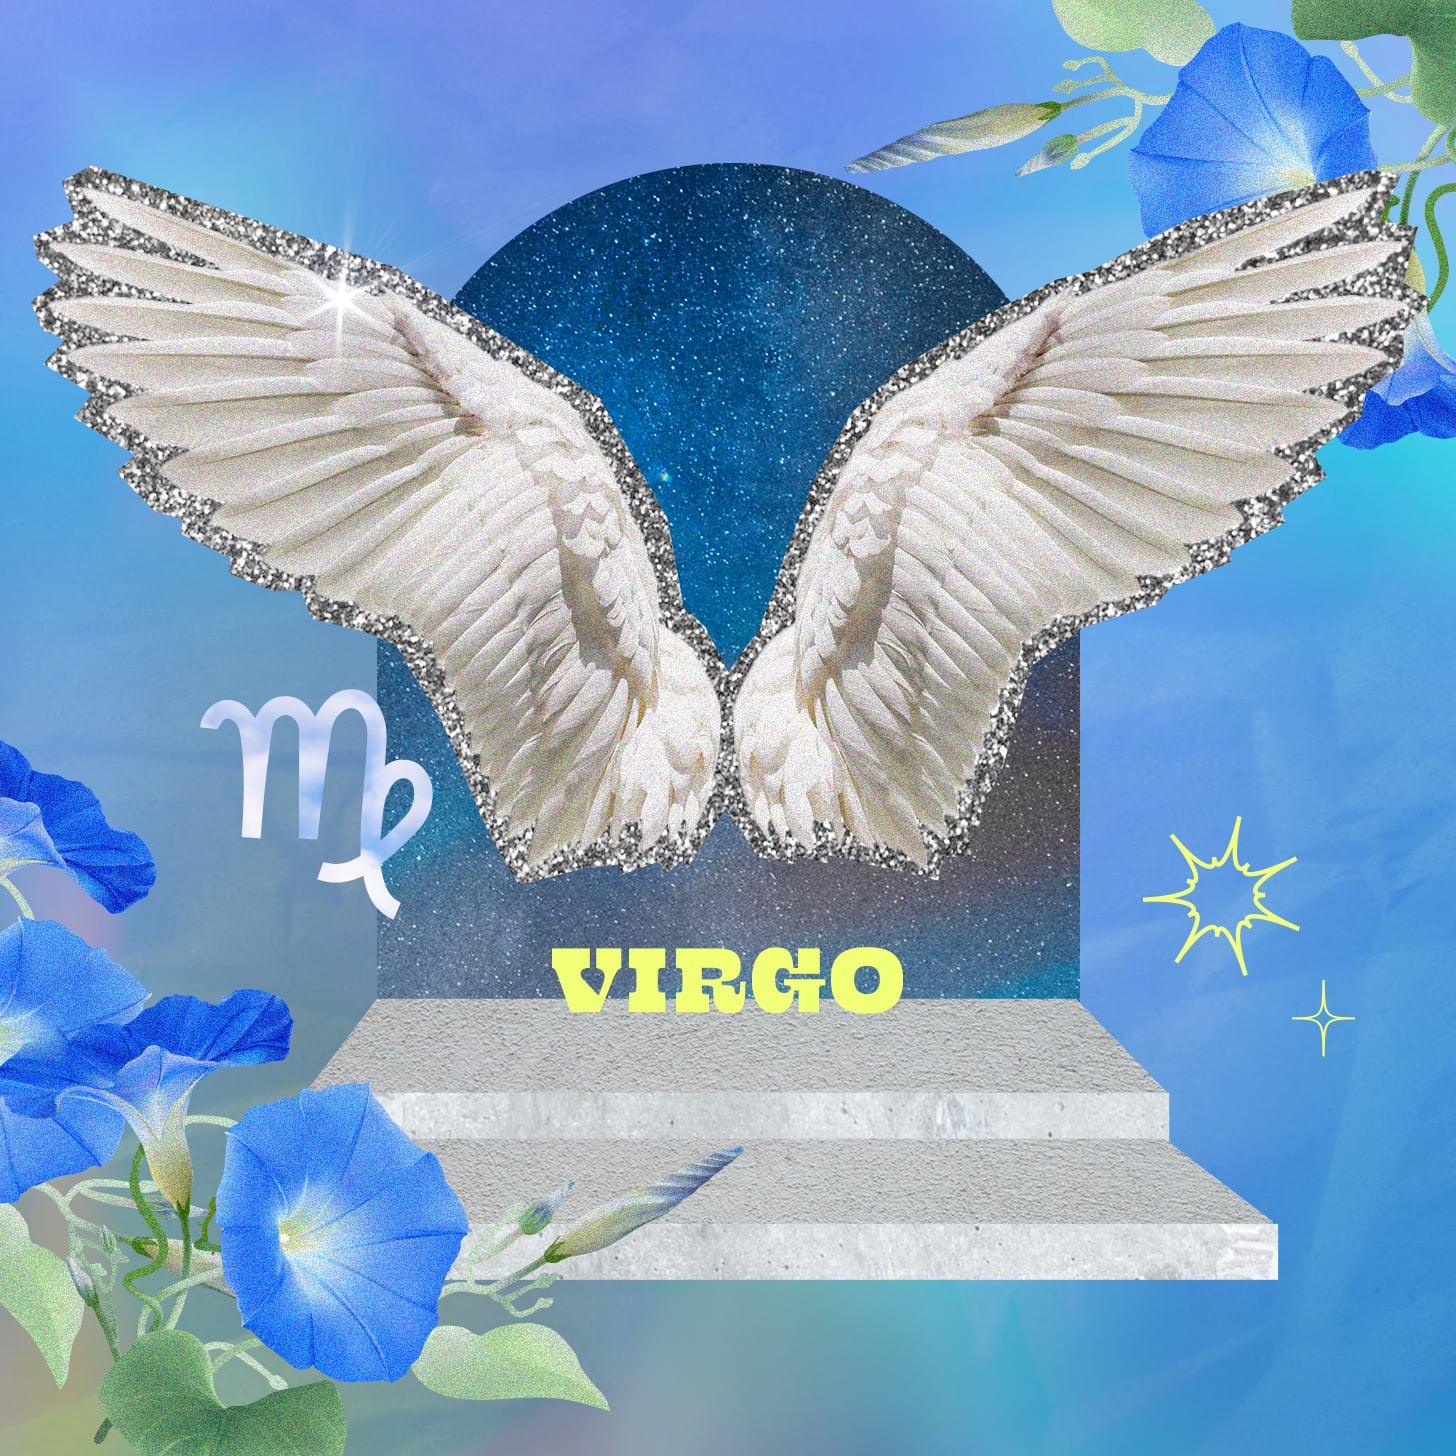 Virgo weekly horoscope for October 9, 2022